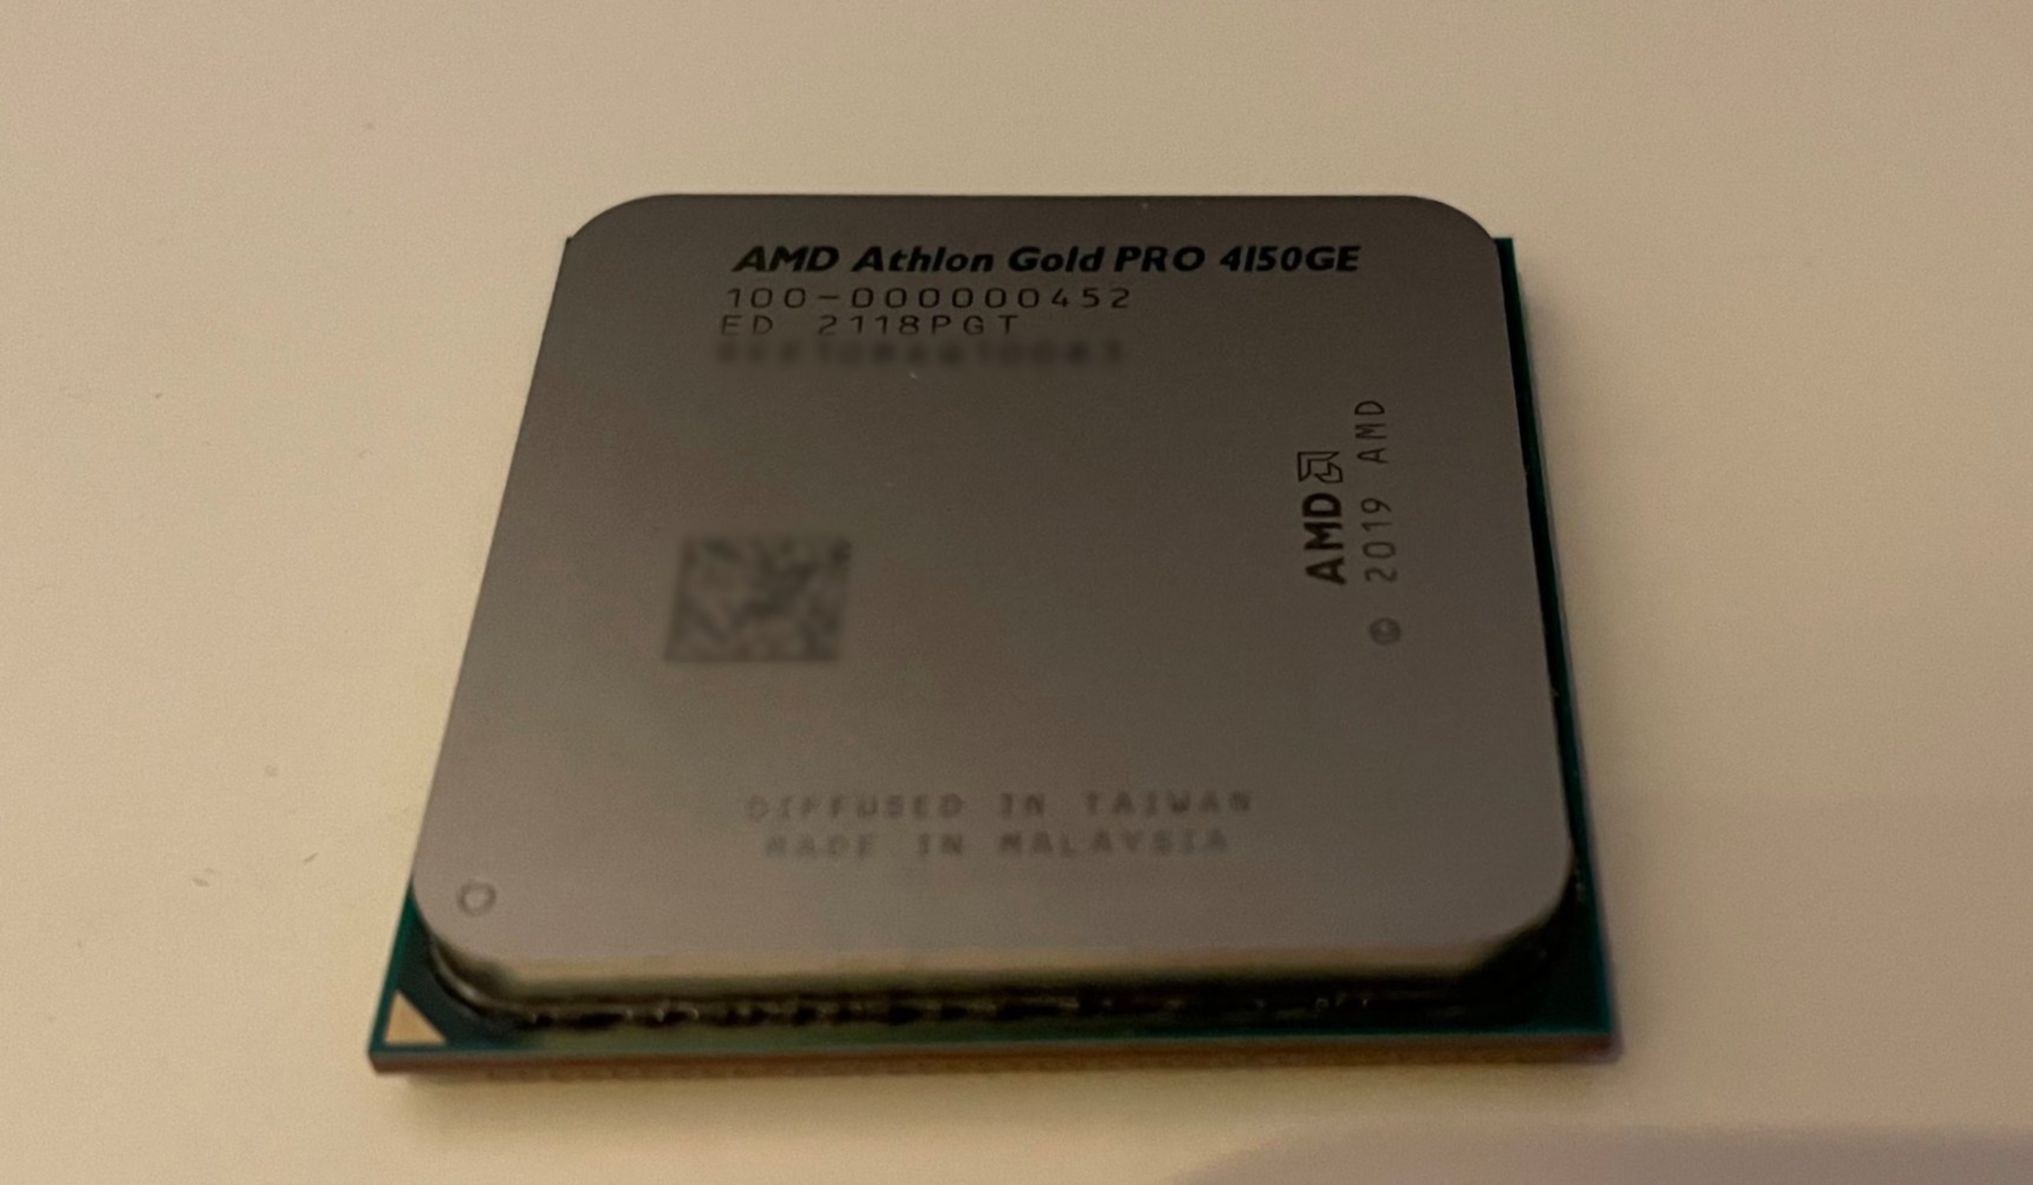 Athlon Gold Pro